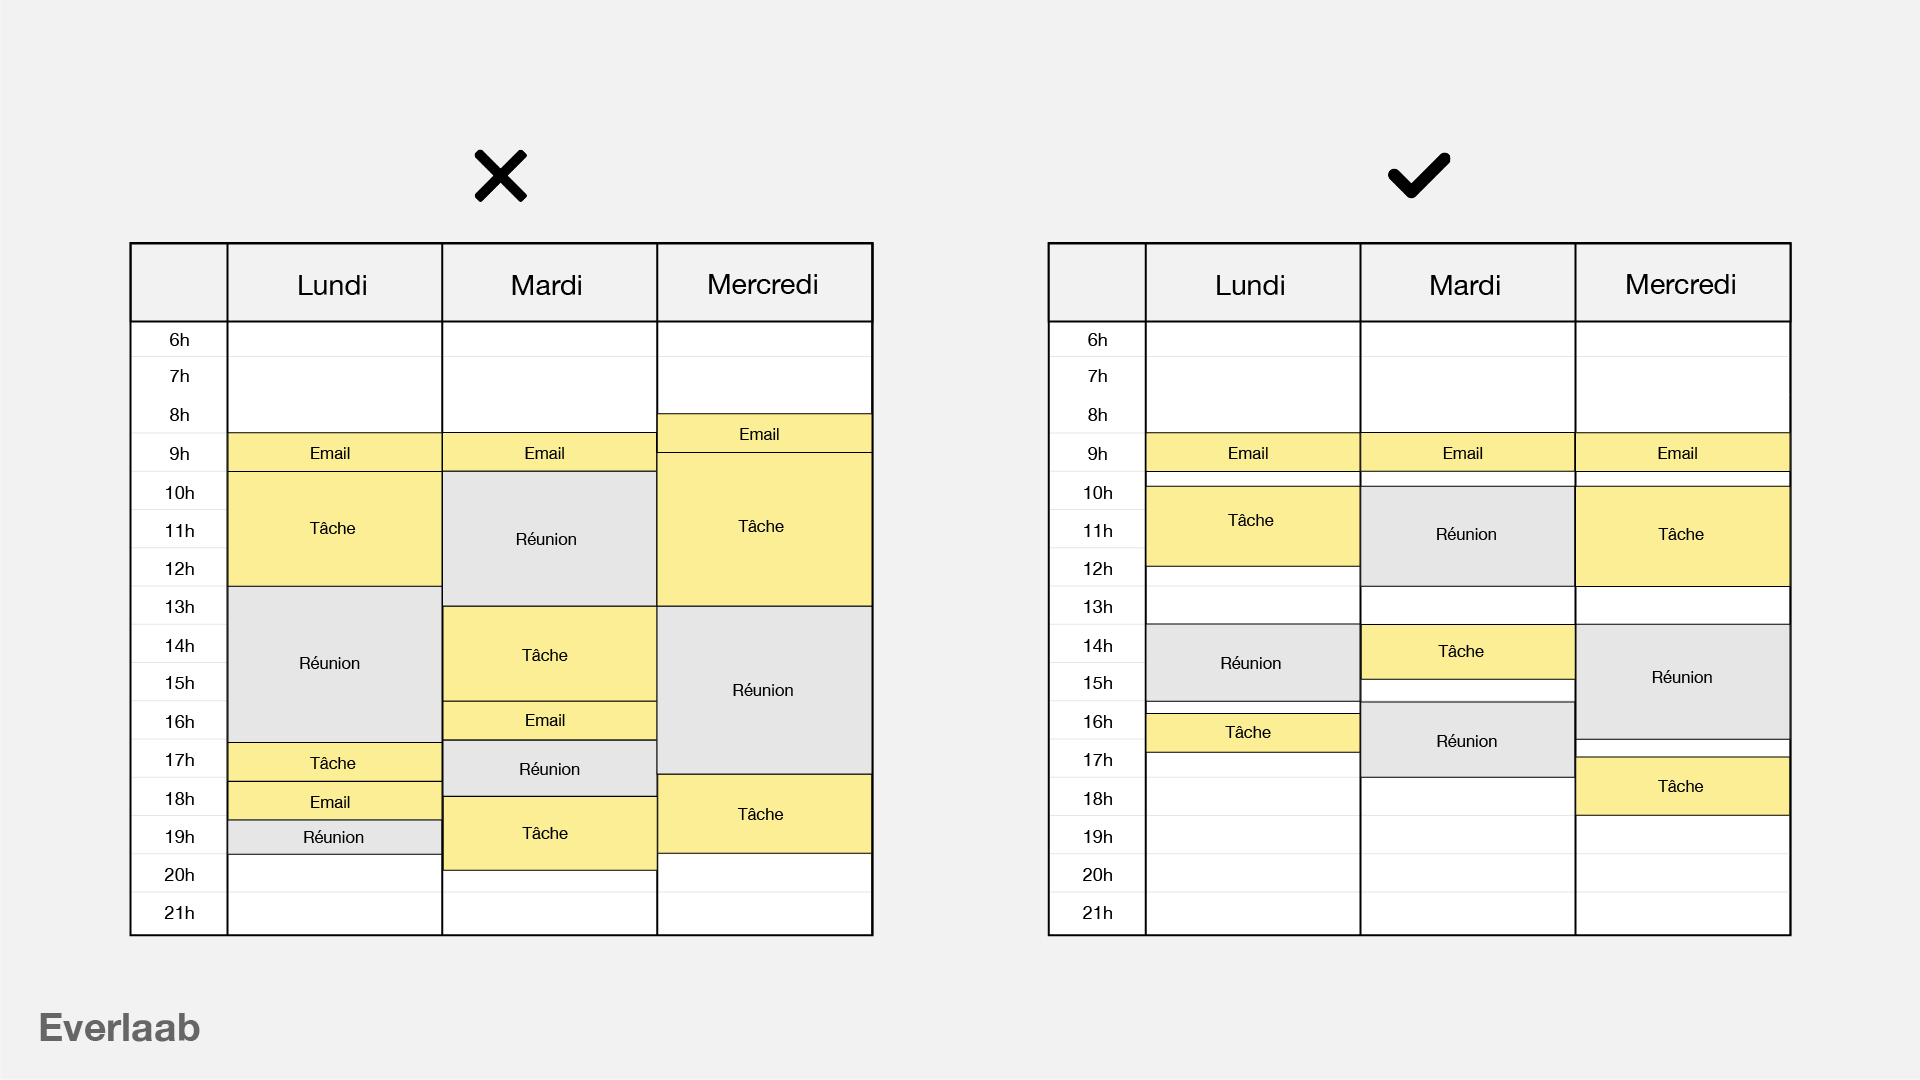 Planning mensuel (ancienne version)